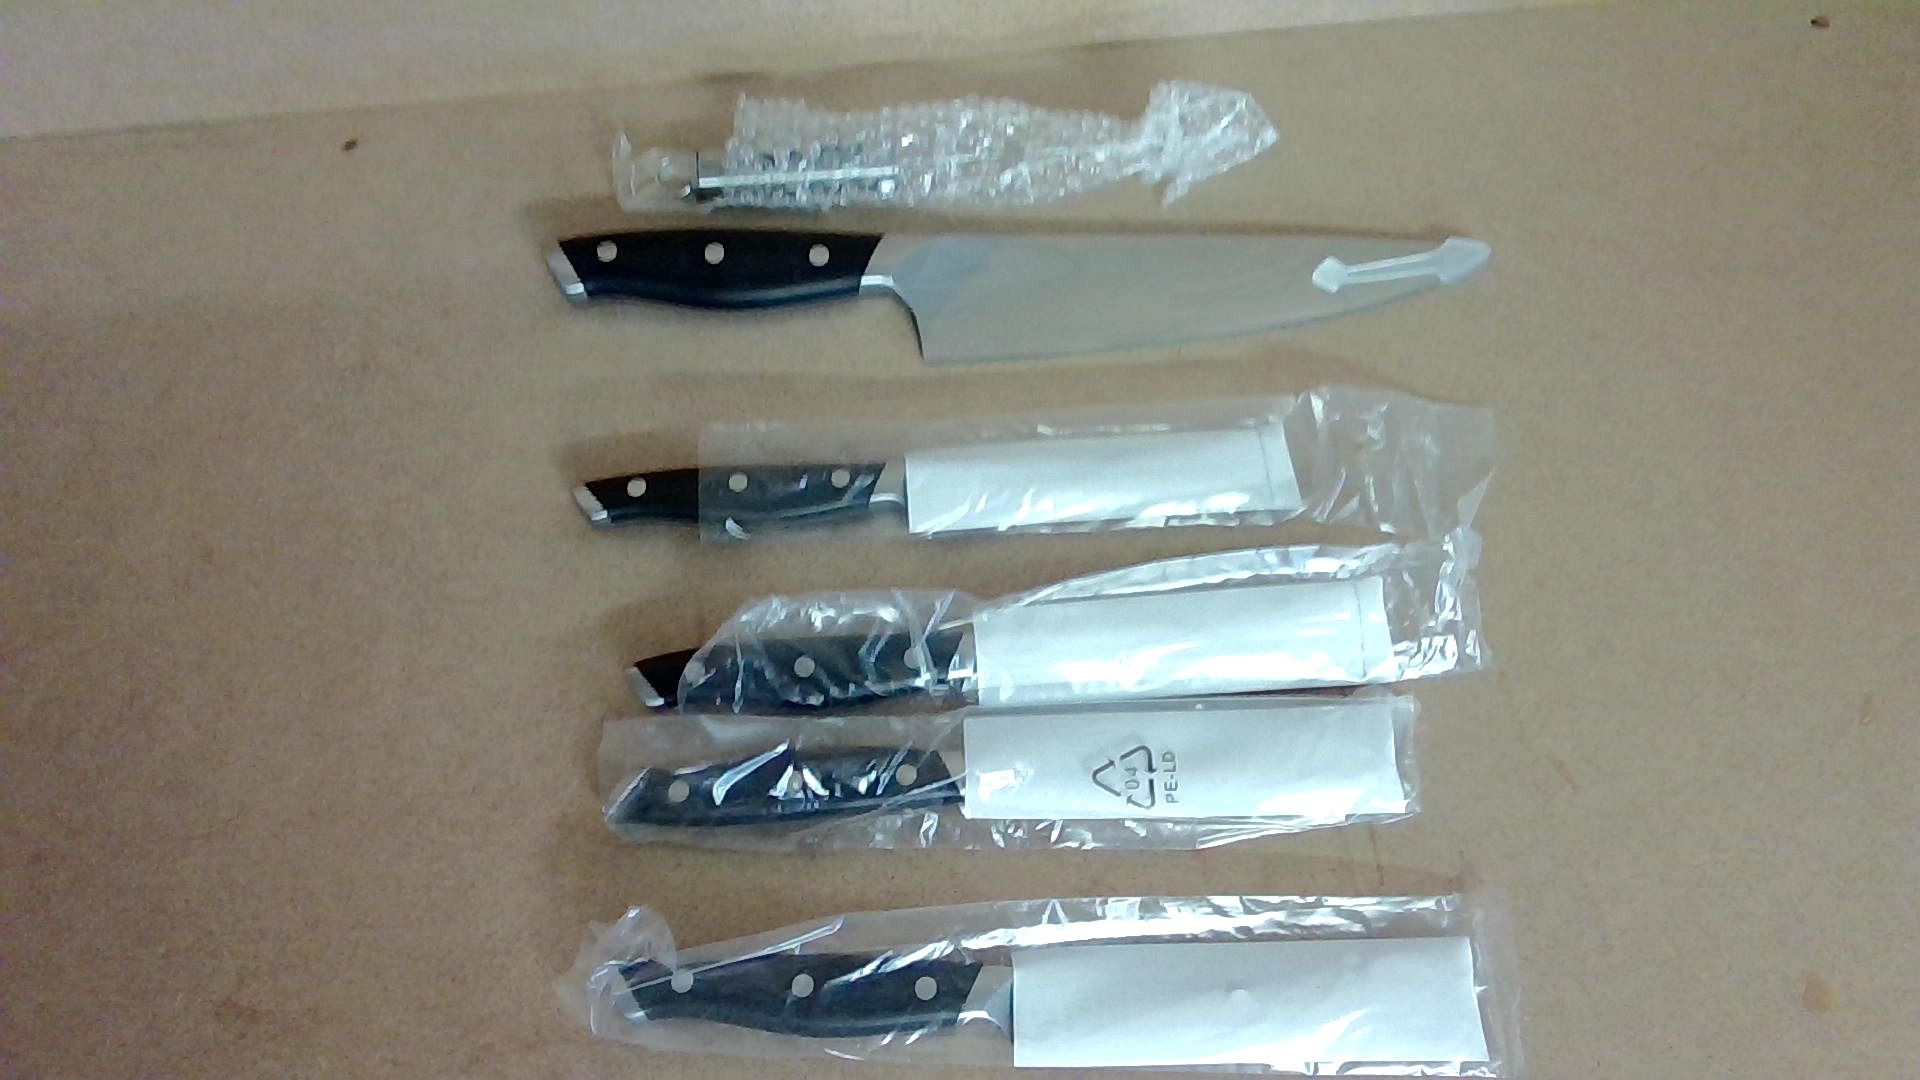 Trusted butchers knife set